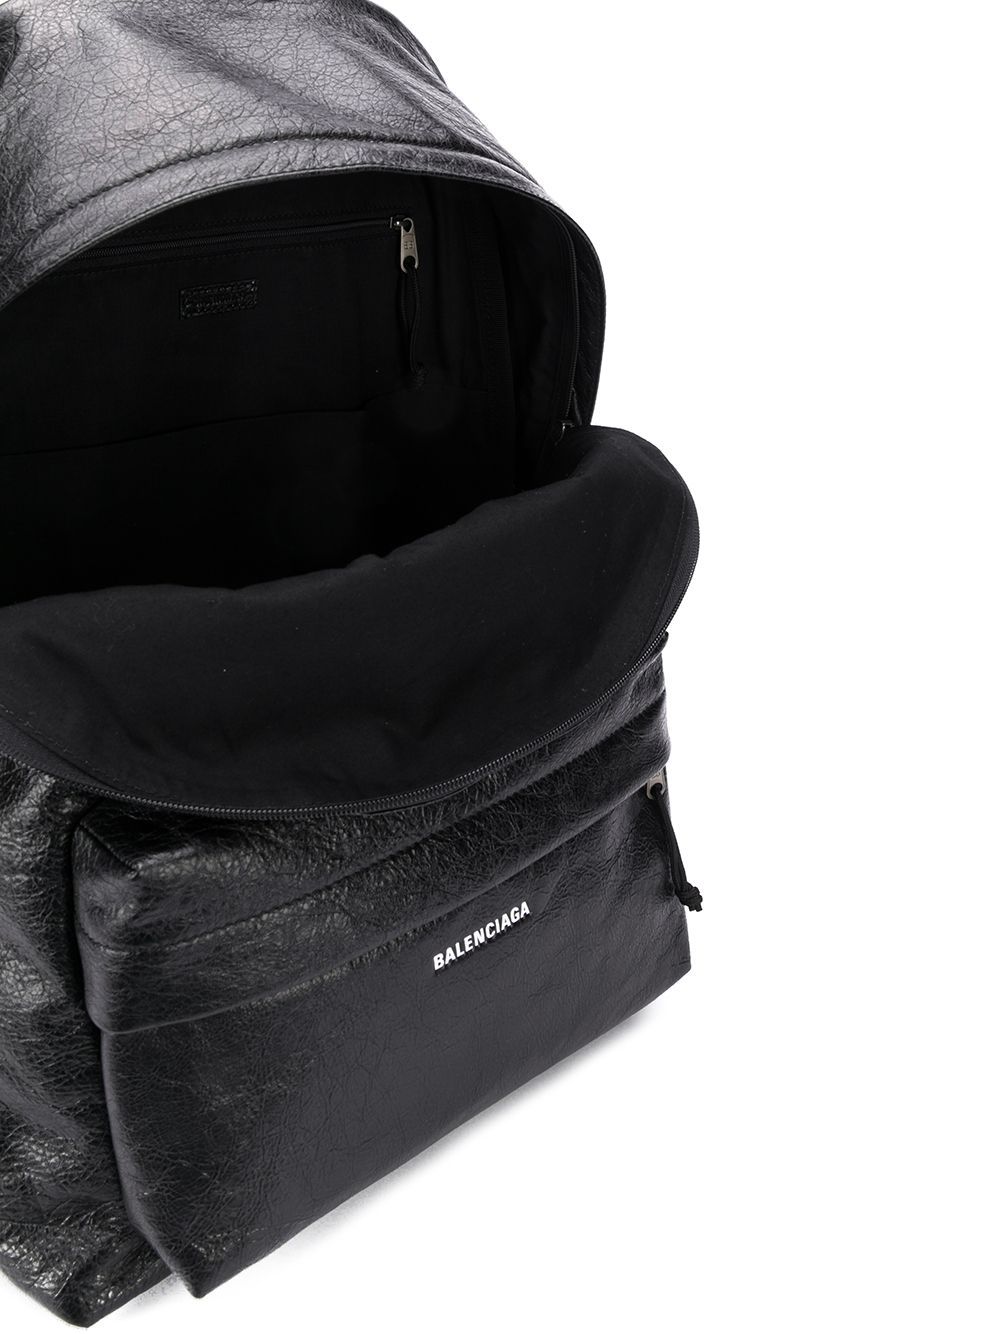 фото Balenciaga рюкзак с логотипом